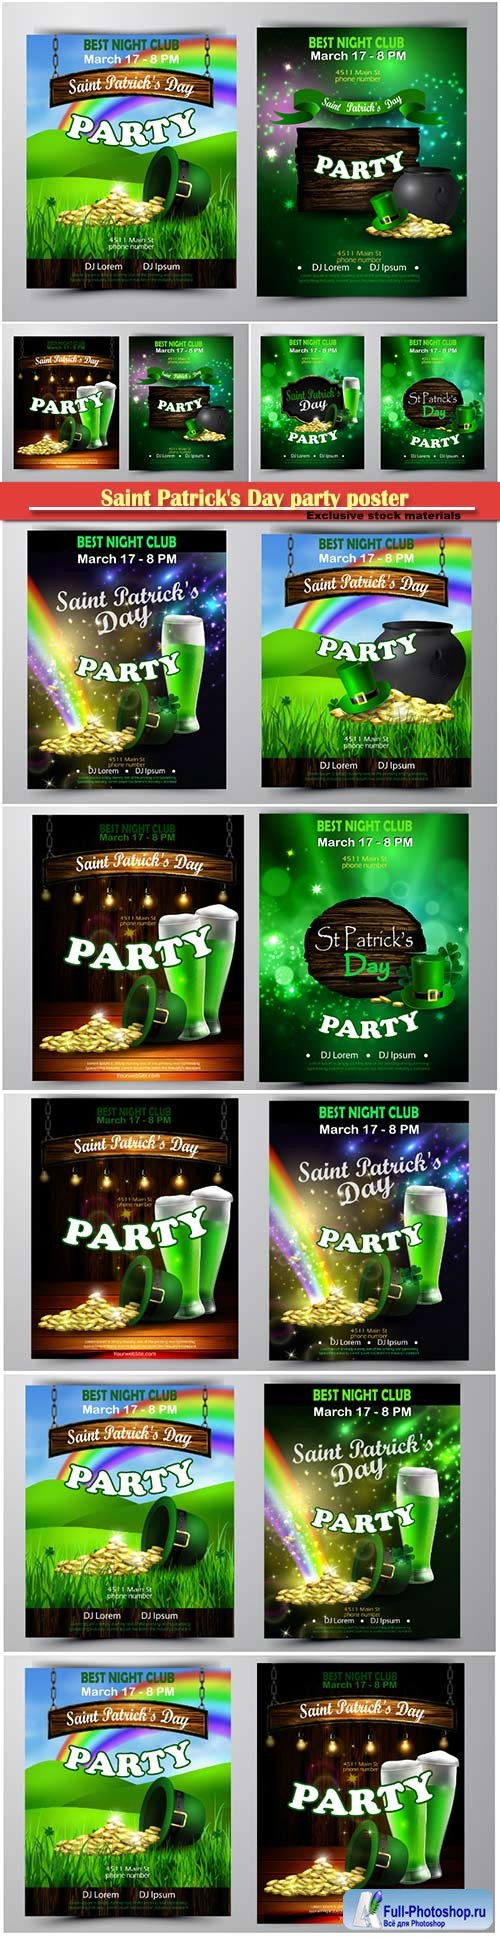 Irish holiday Saint Patrick s Day party poster